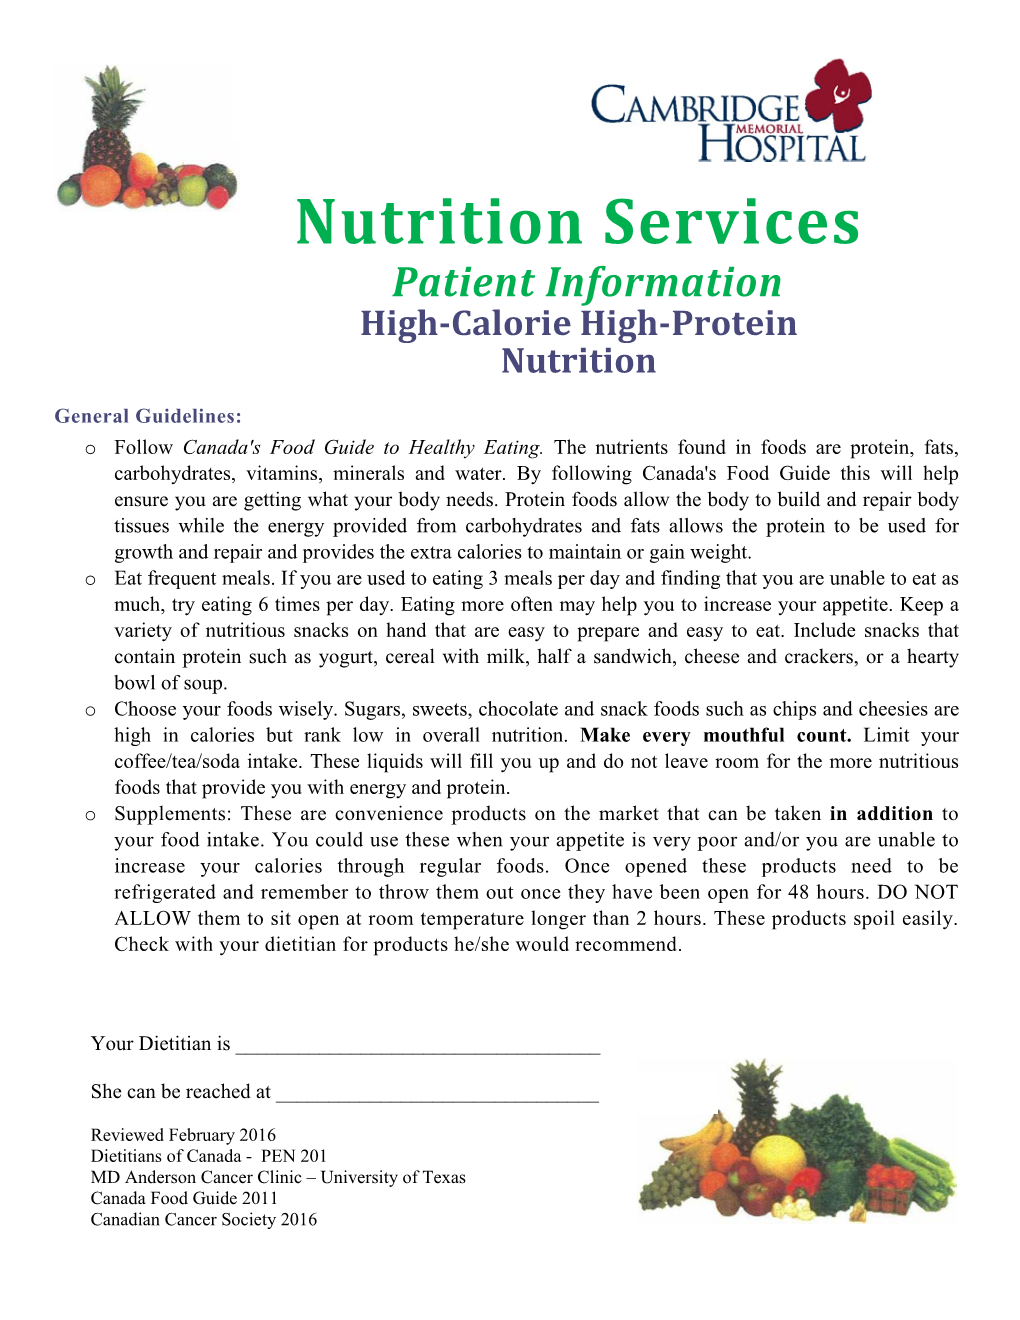 High Calorie High Protein